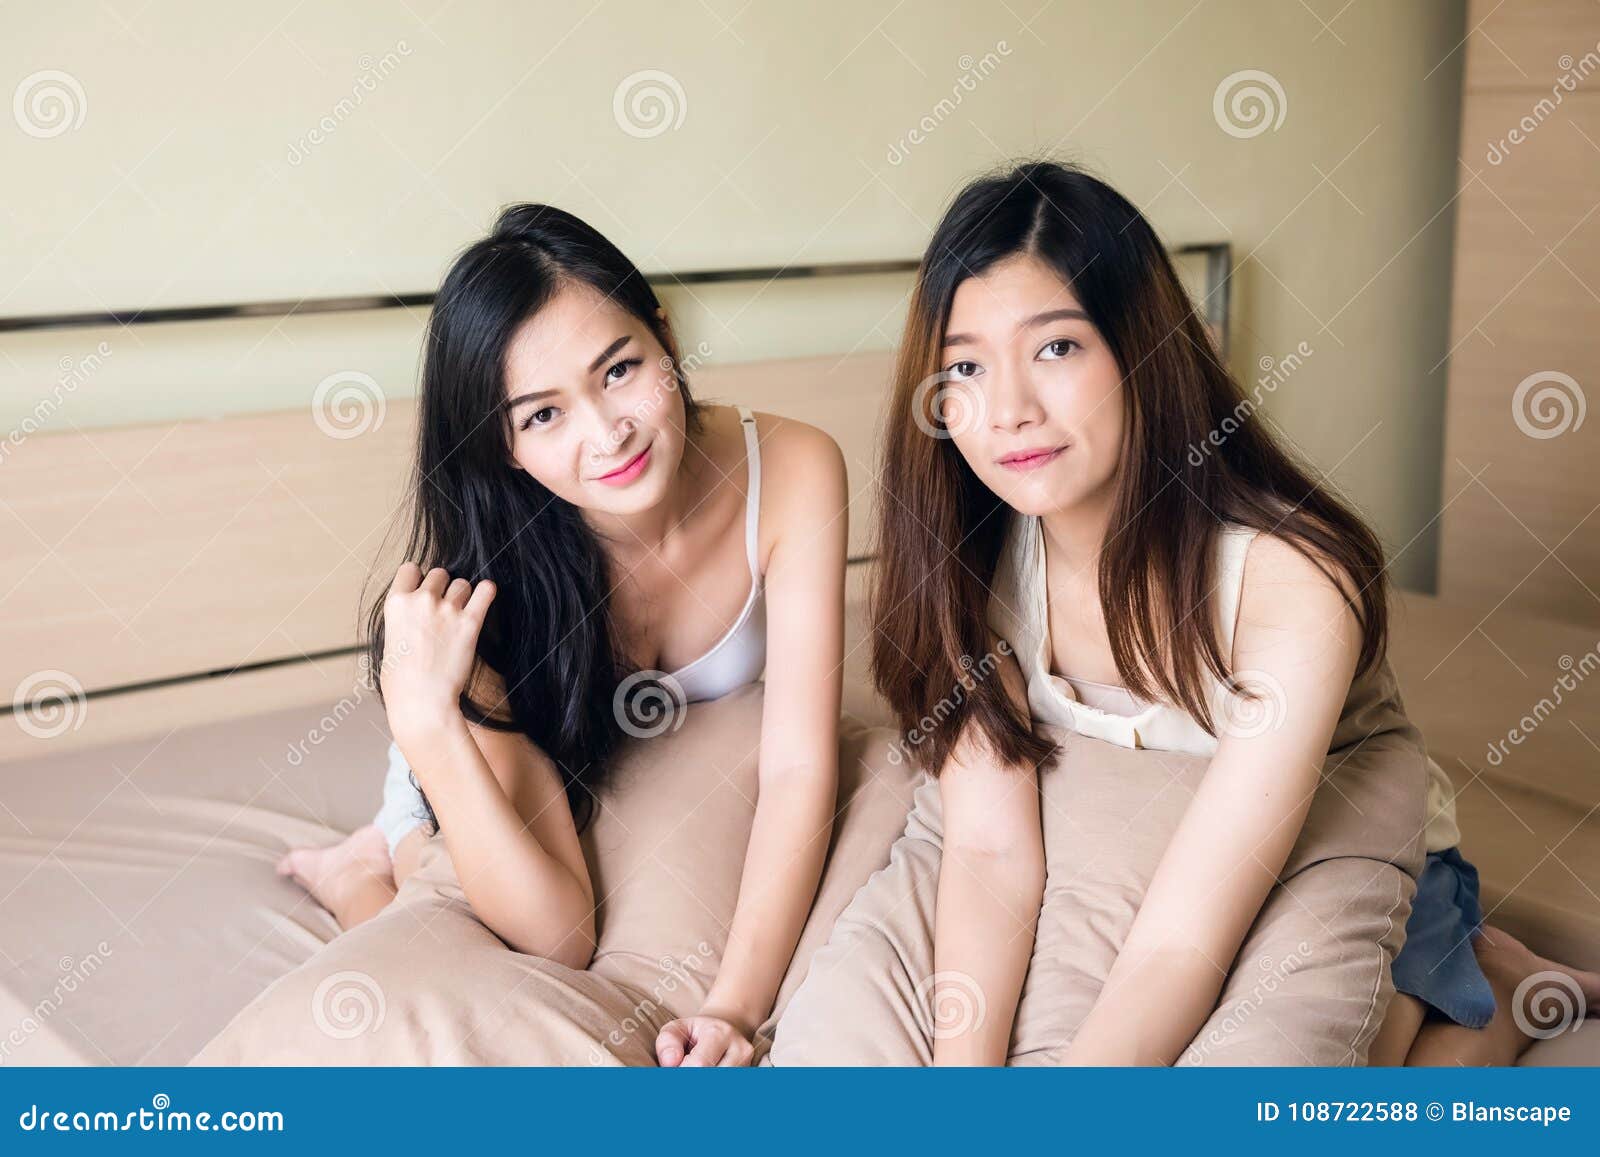 Lesbian asians